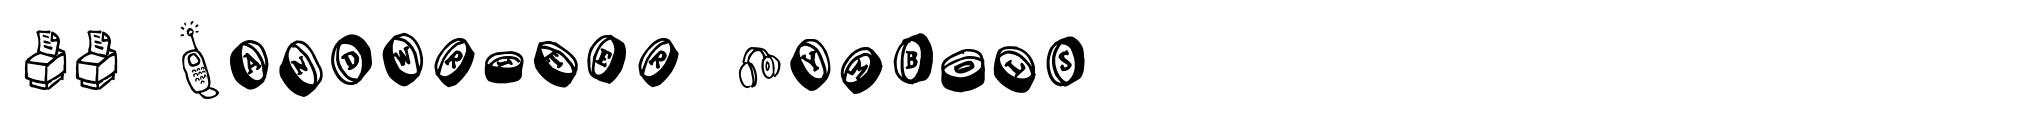 FF Handwriter Symbols image